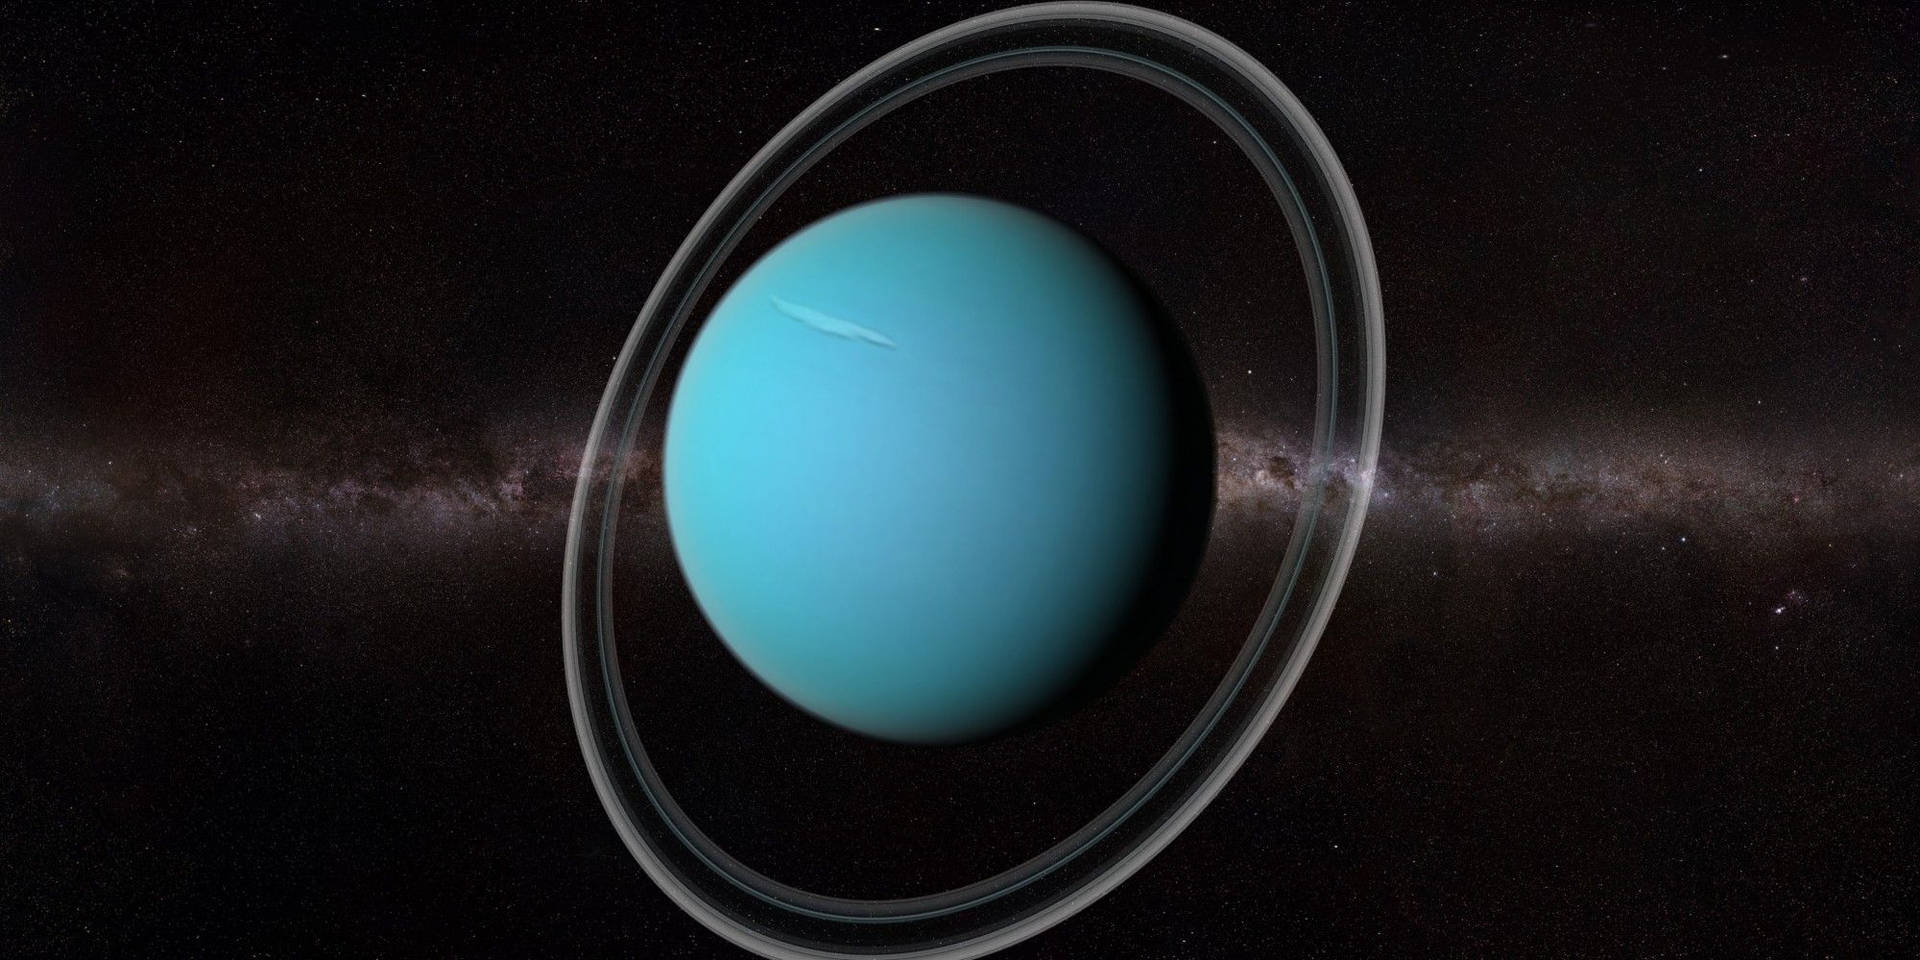 Top 999+ Uranus Wallpapers Full HD, 4K✅Free to Use